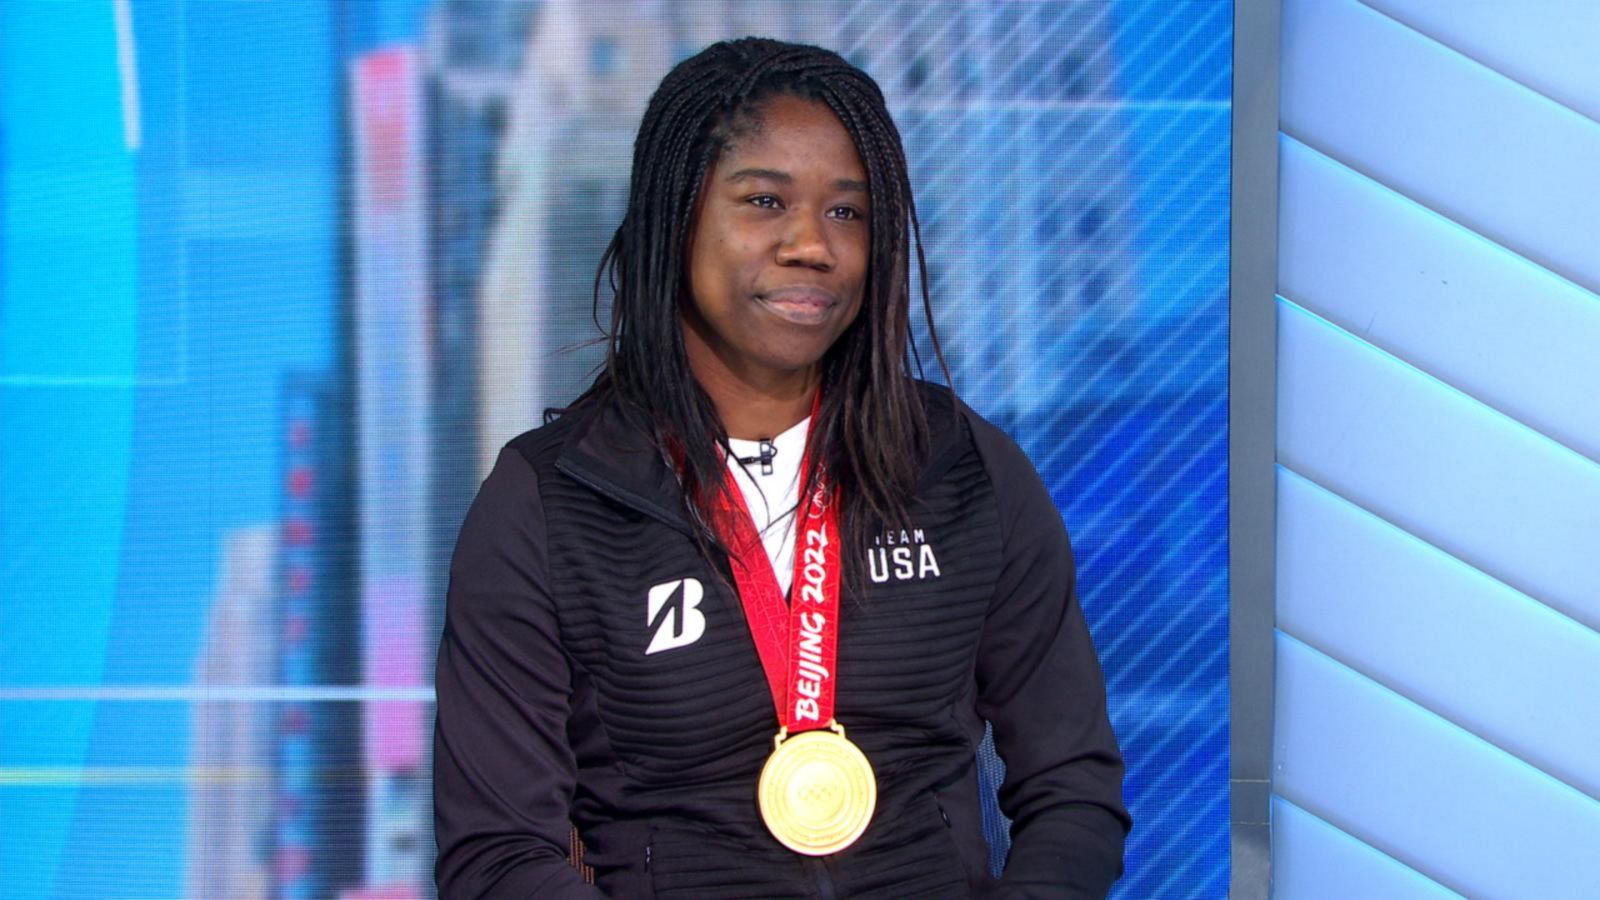 VIDEO: Olympian Erin Jackson talks about her big win in Beijing